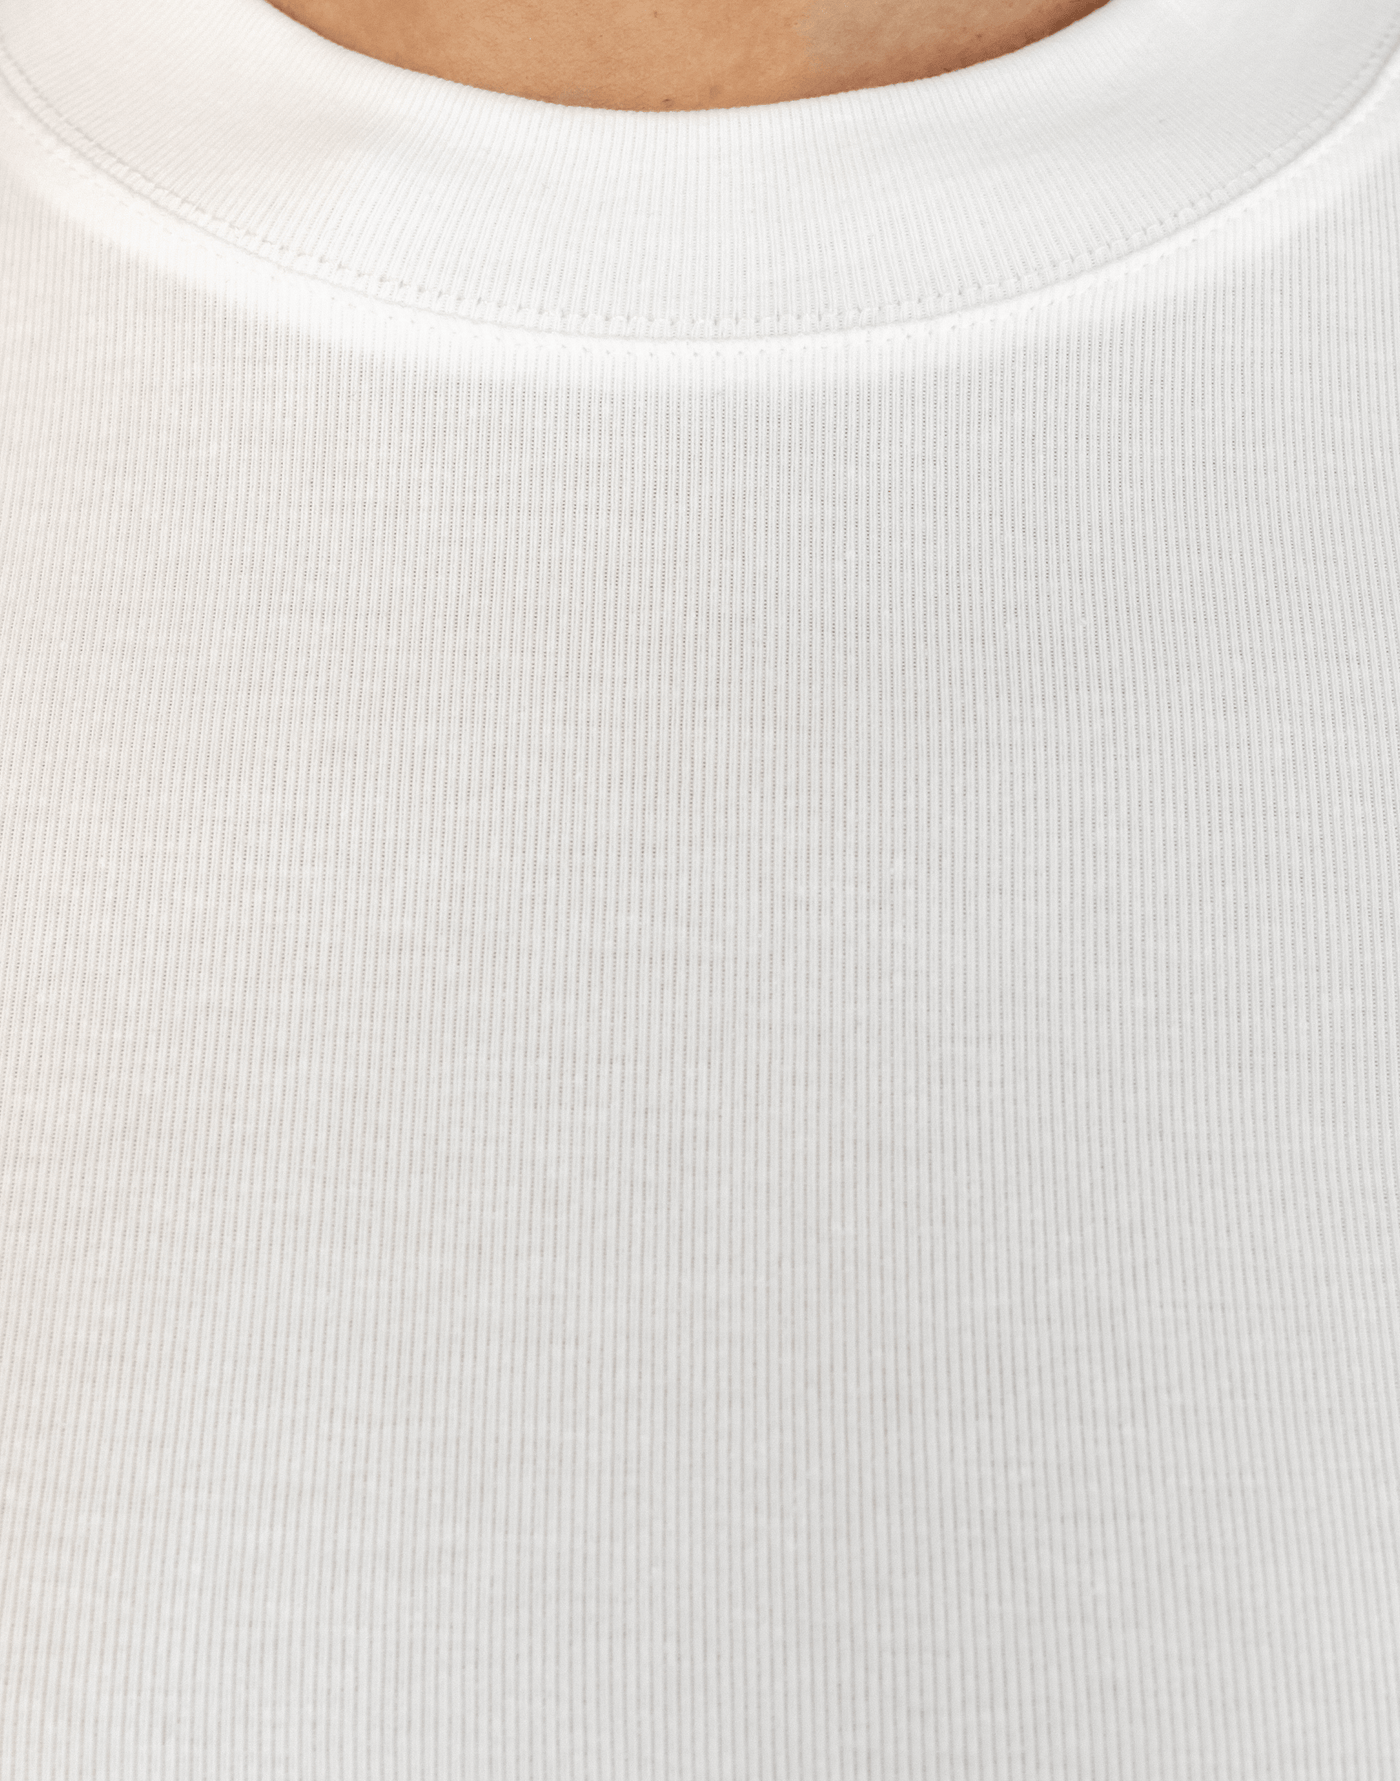 Wisteria Long Sleeve Bodysuit (White) - High Neckline Bodysuit - Women's Top - Charcoal Clothing